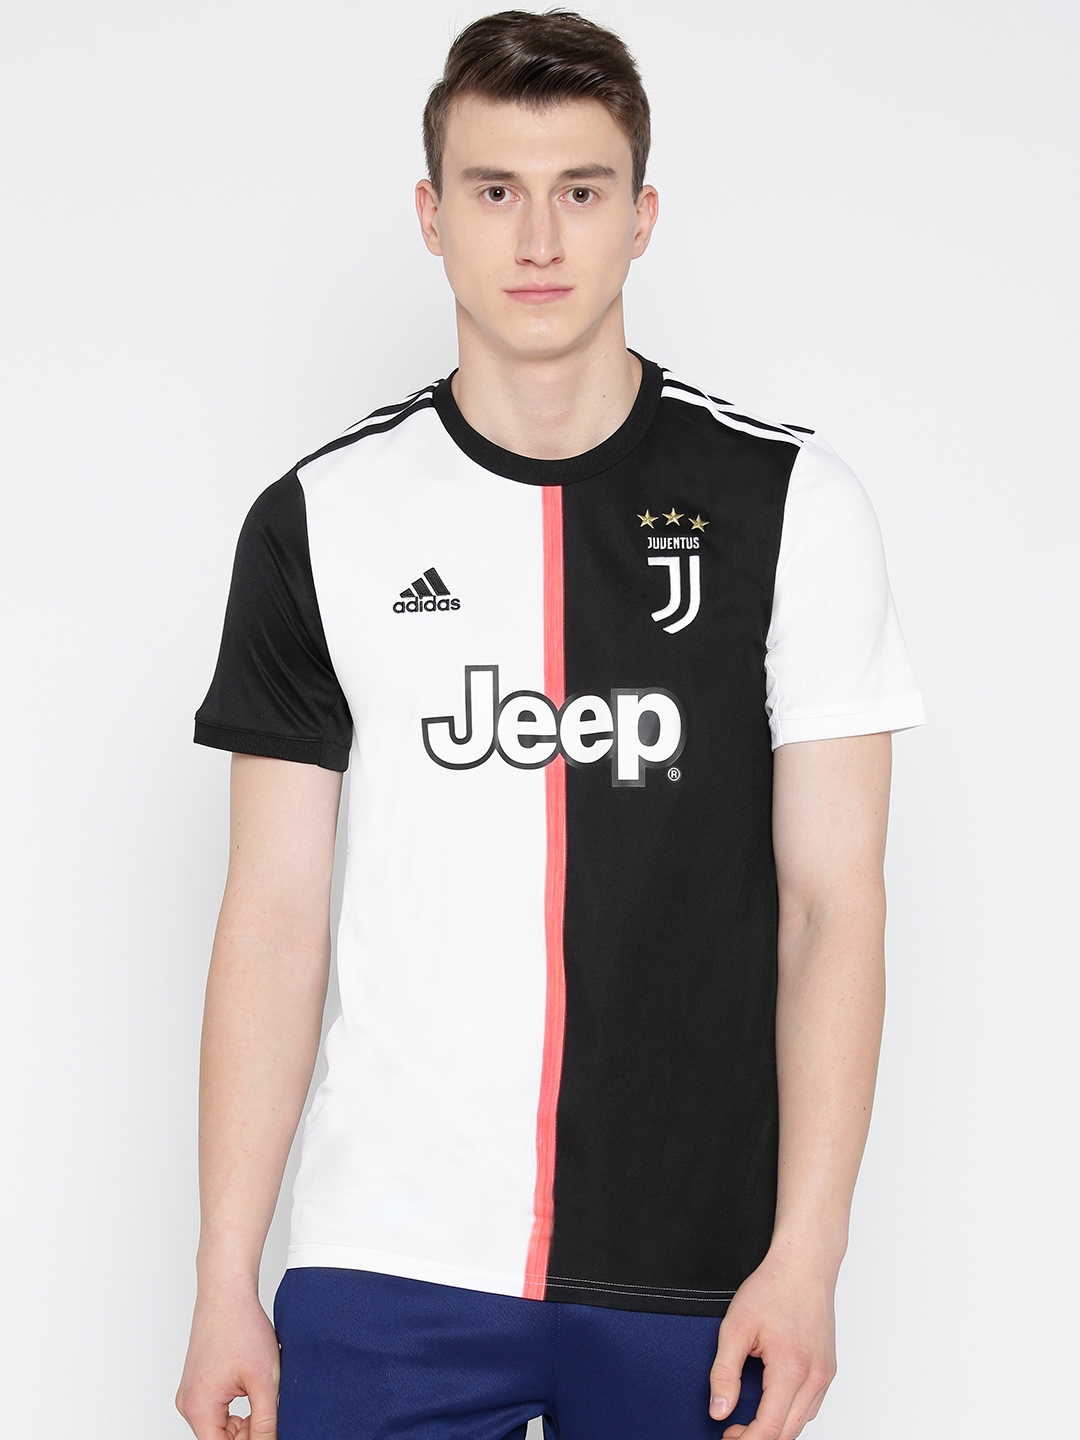 Inaccurate school Subordinate Buy ADIDAS Men Black & White Printed Juventus Home Football Jersey -  Tshirts for Men 9791417 | Myntra